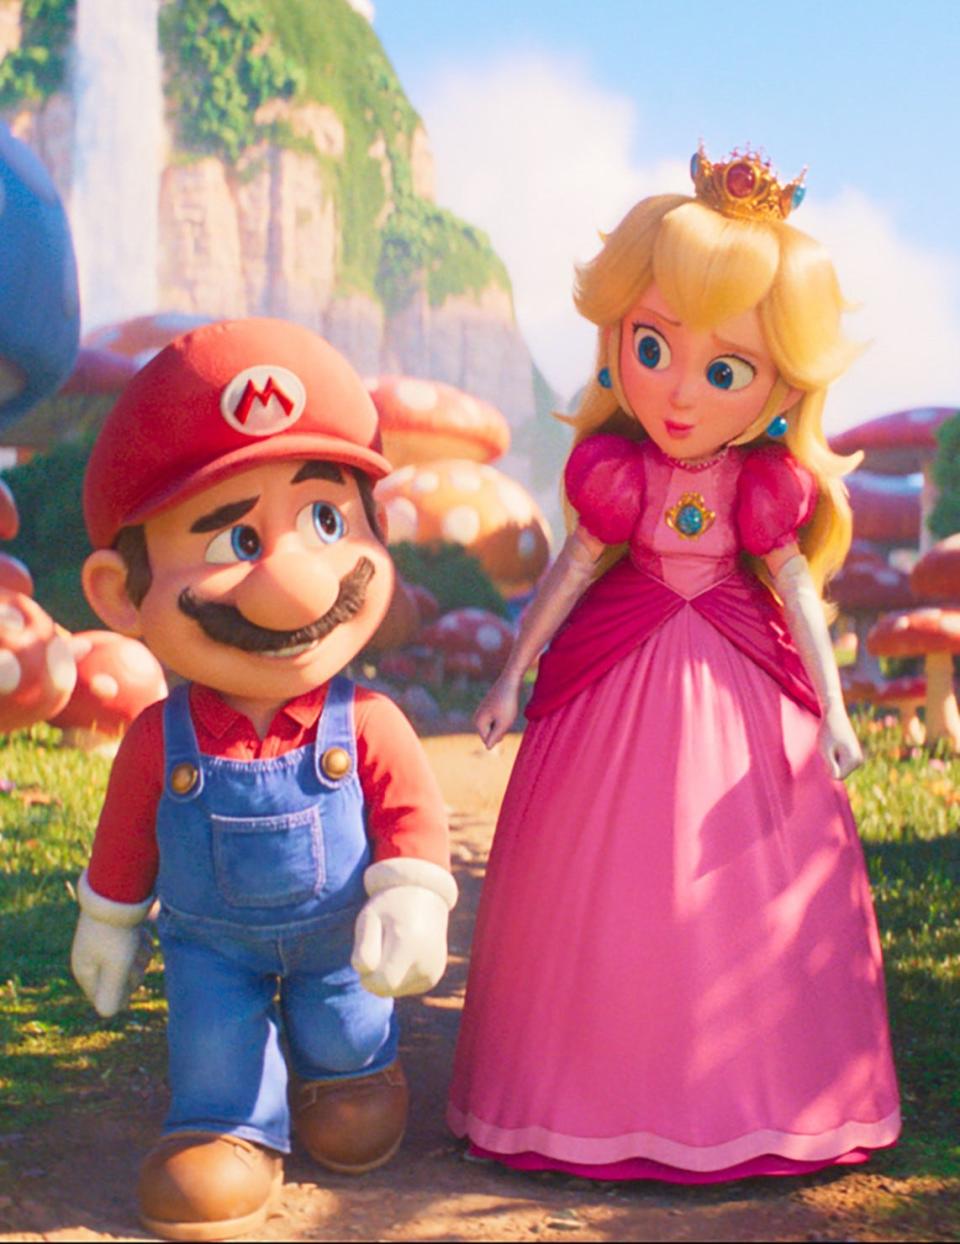 Mario (Chris Pratt) and Princess Peach (Anya Taylor-Joy) in Nintendo and Illumination’s "The Super Mario Bros. Movie."